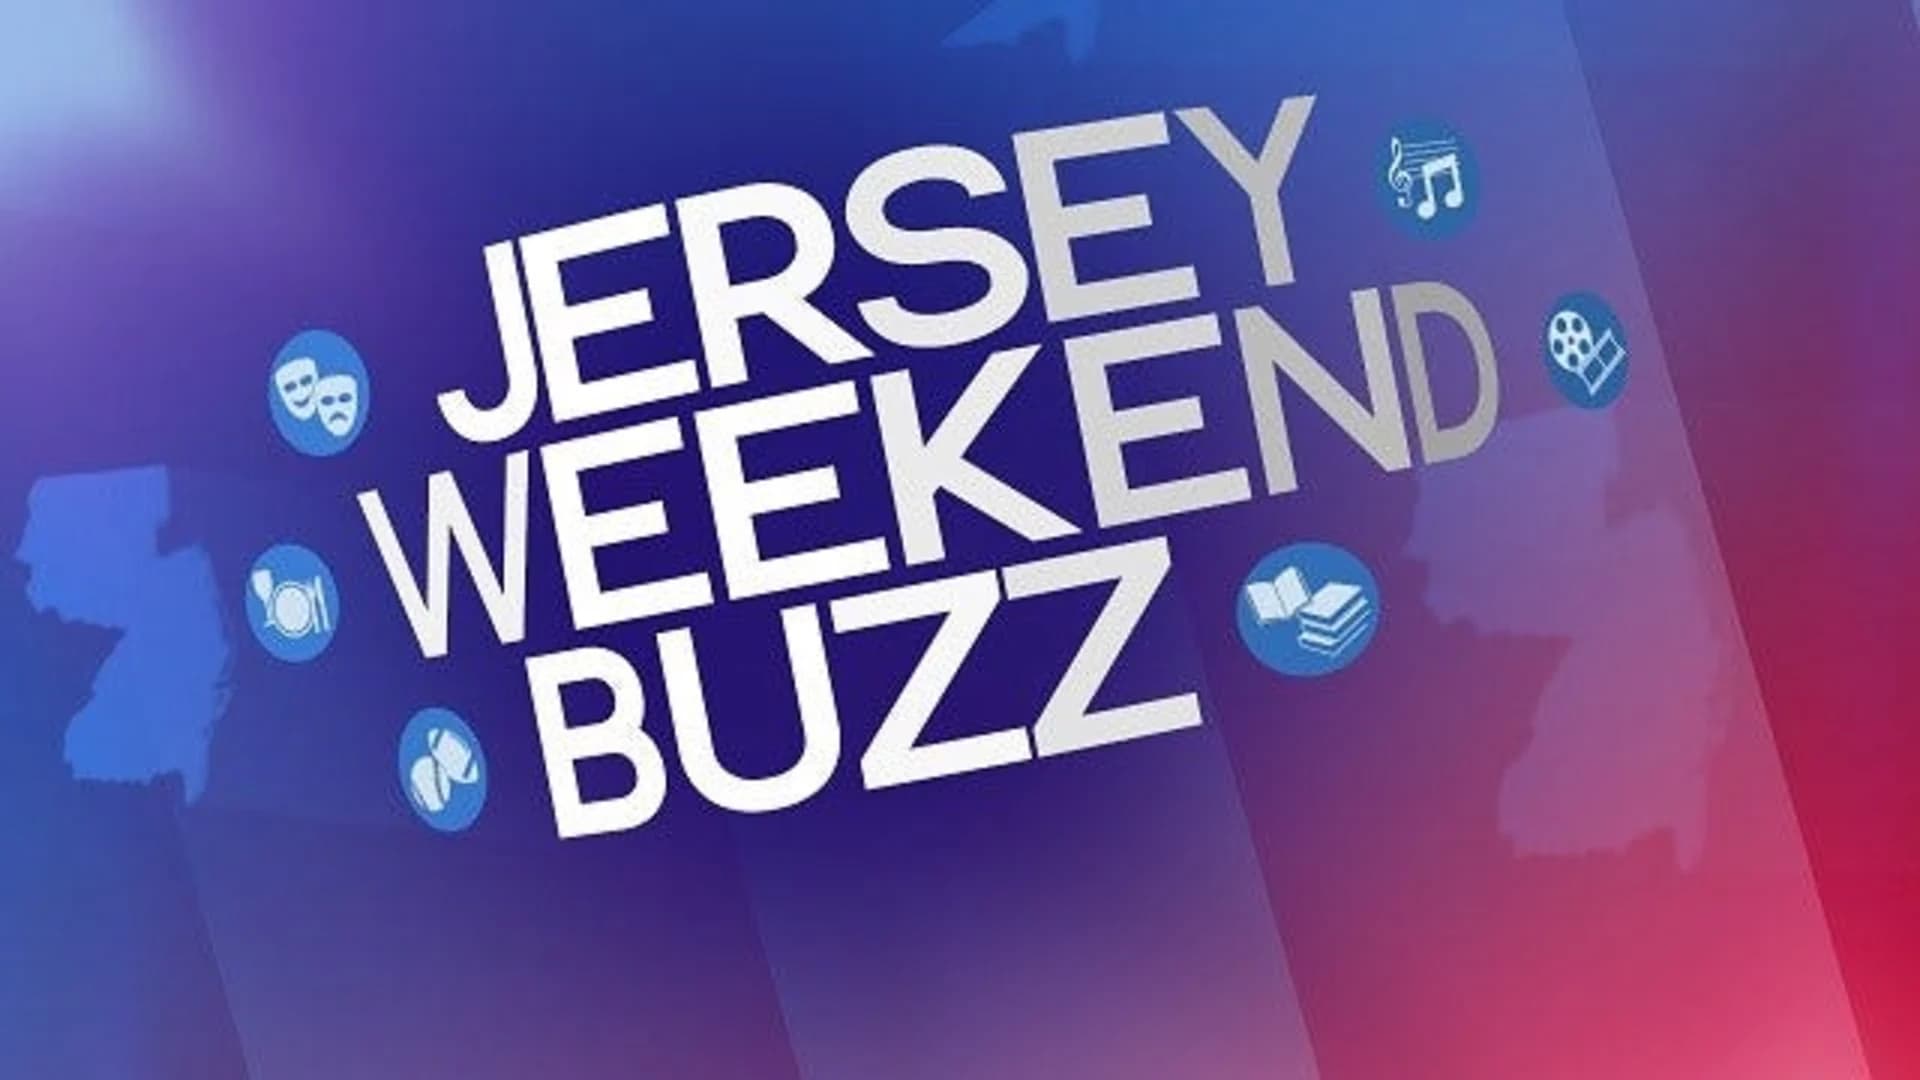 Jersey Weekend Buzz: Nov. 17-19, 2017